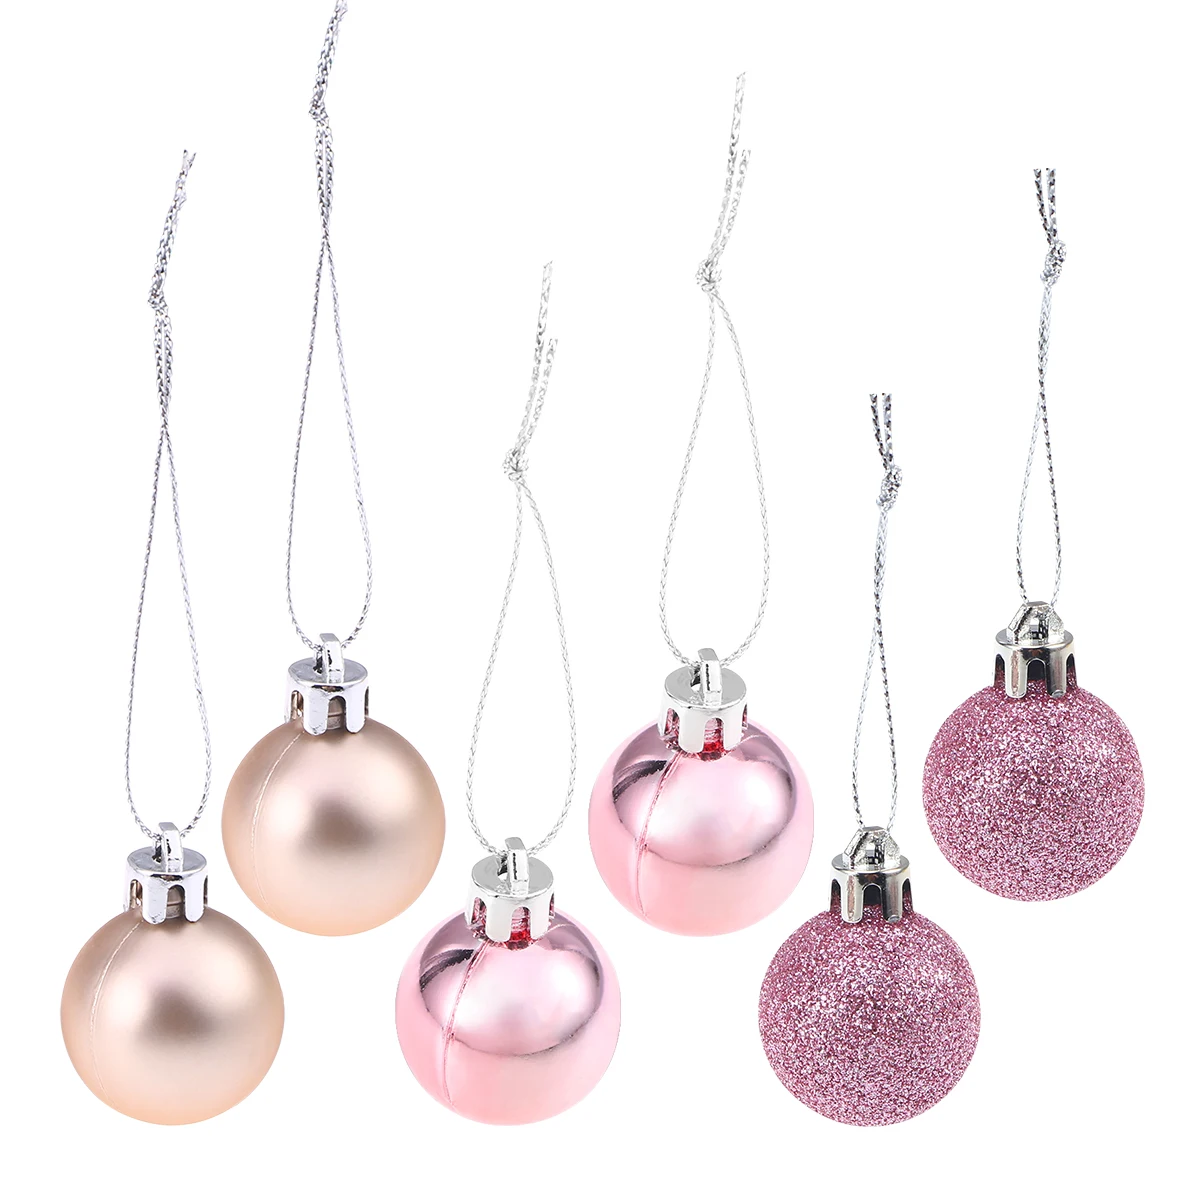 

24pcs Christmas Pink Ball Ornaments Tree Decorations Xmas Baubles For Holiday Wedding Party Decoration Navidad Gift